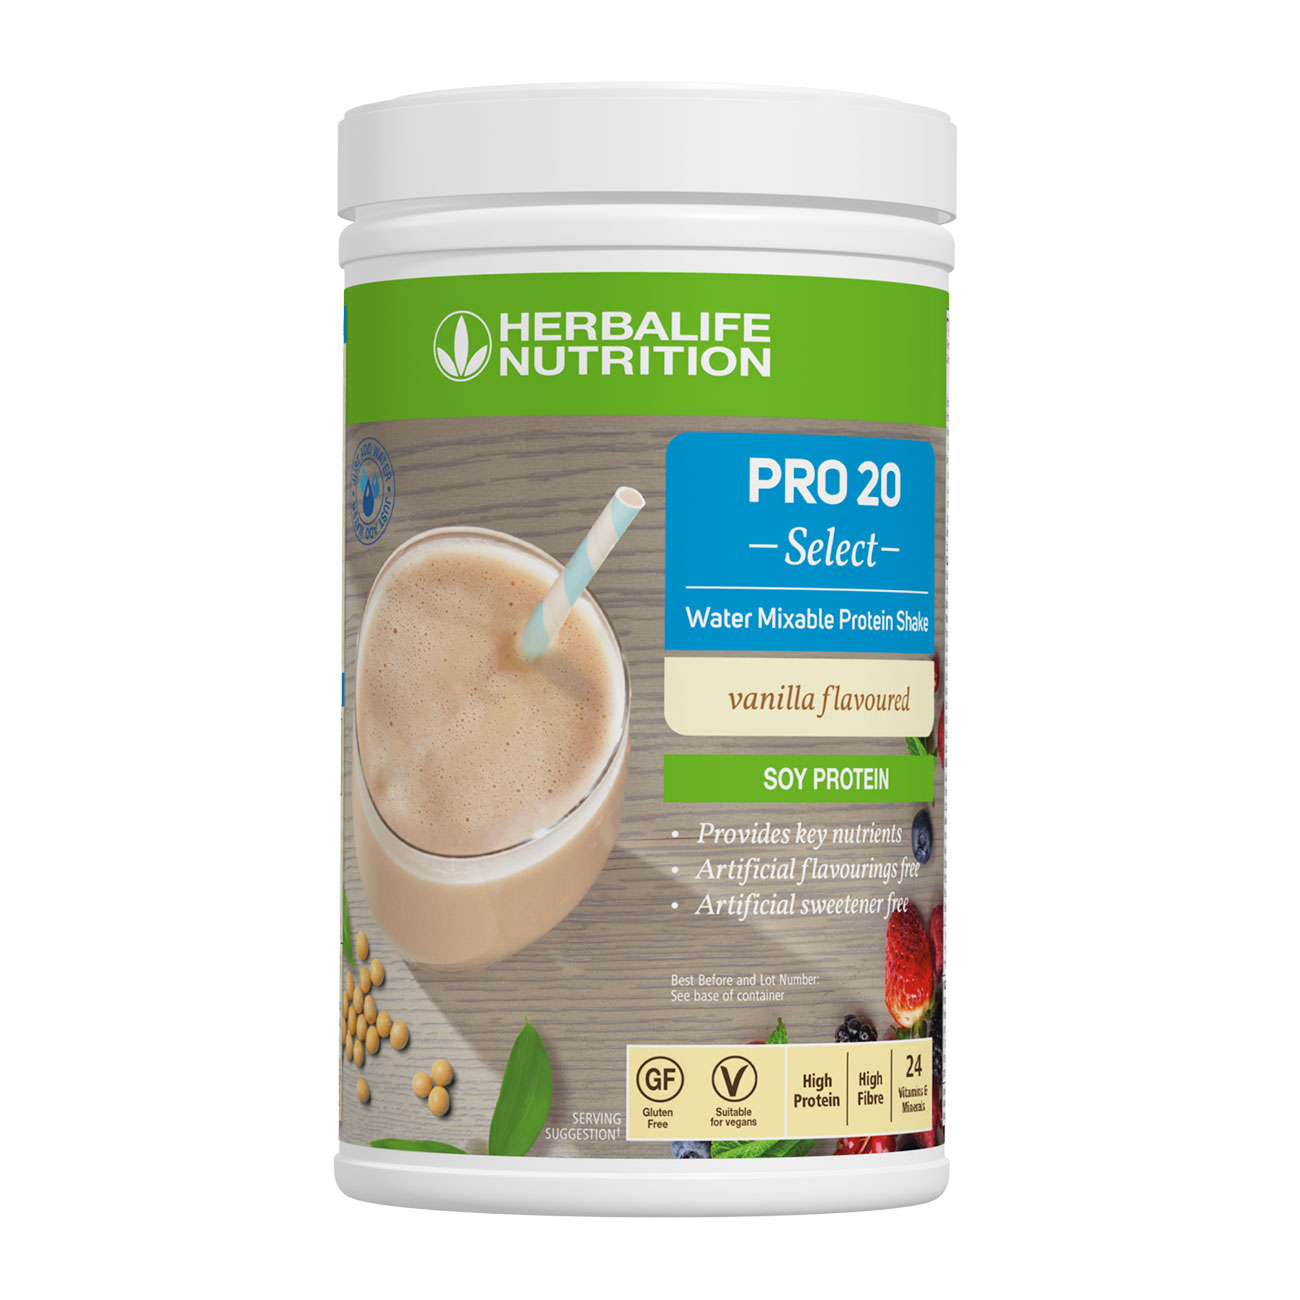 PRO 20 Select Protein Shake Vanilla product shot.